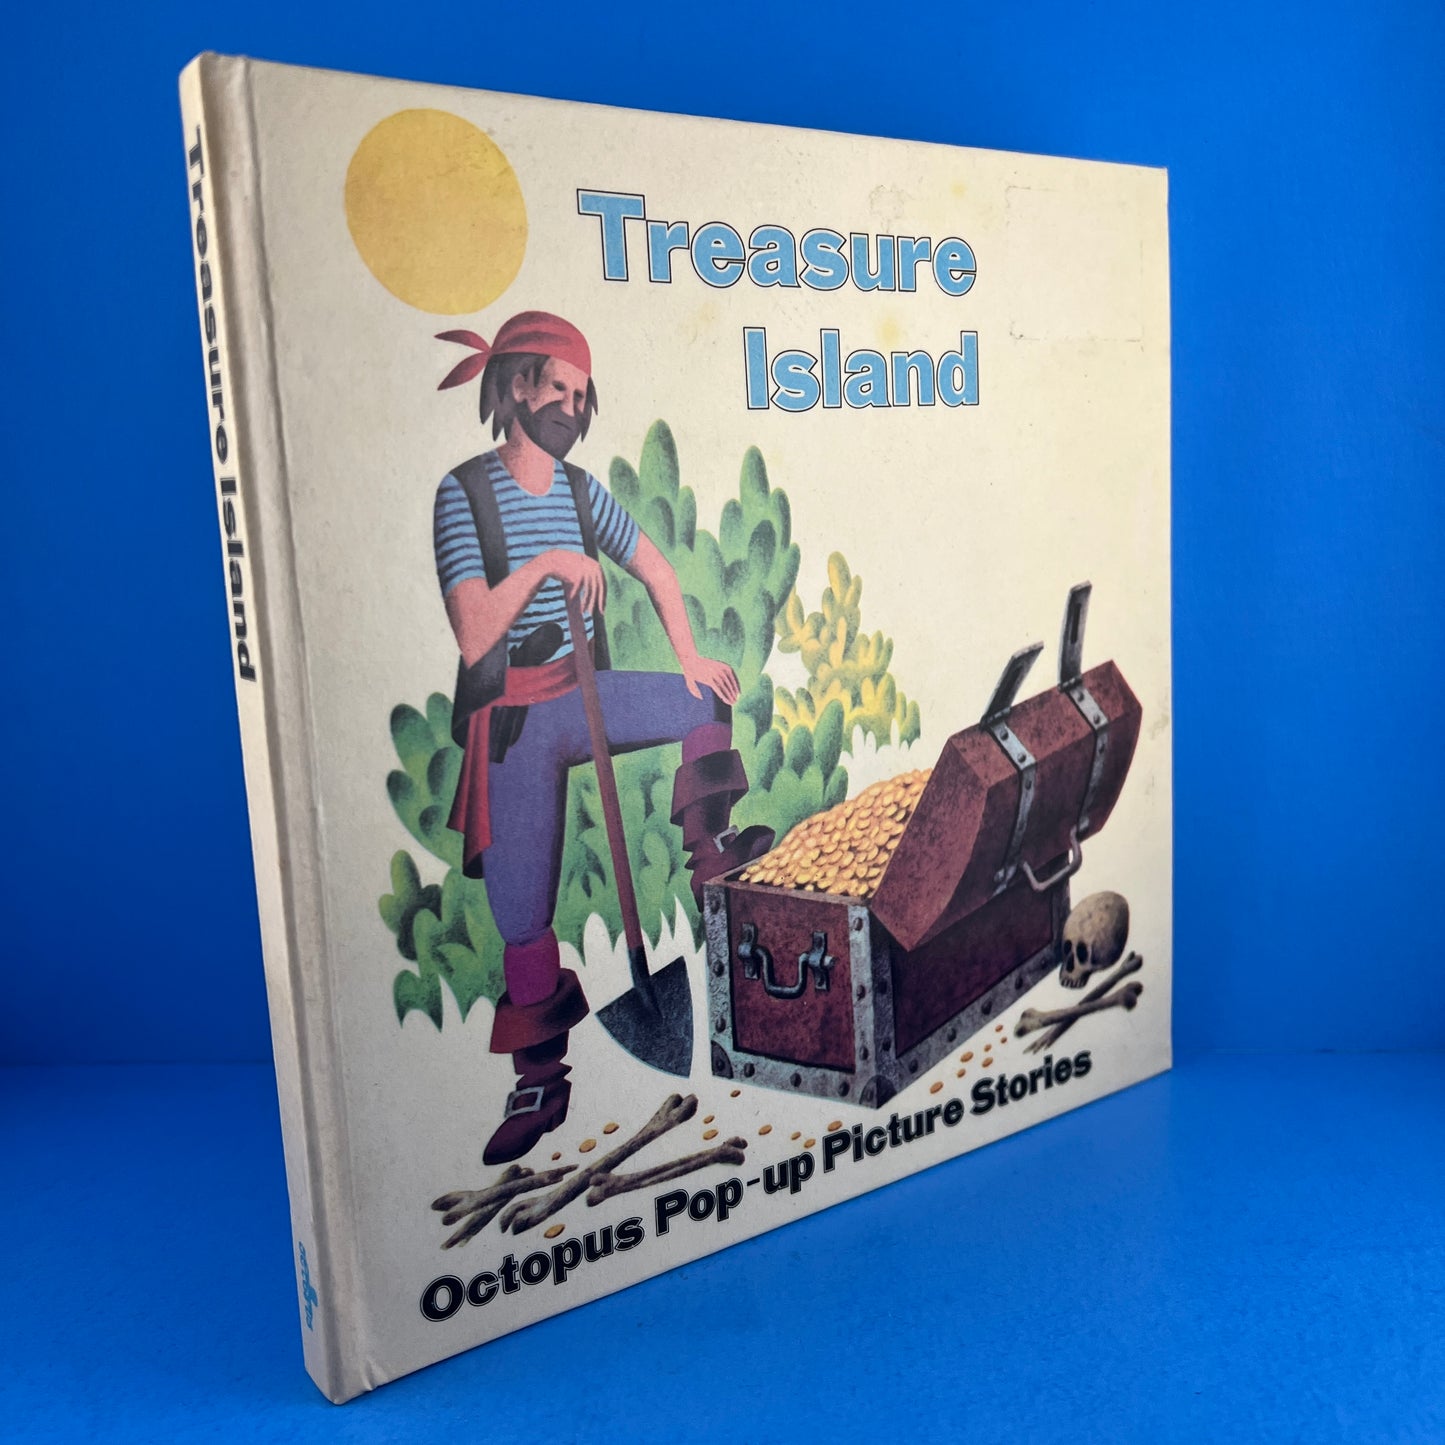 Treasure Island (Octopus Pop-Up Picture Stories)